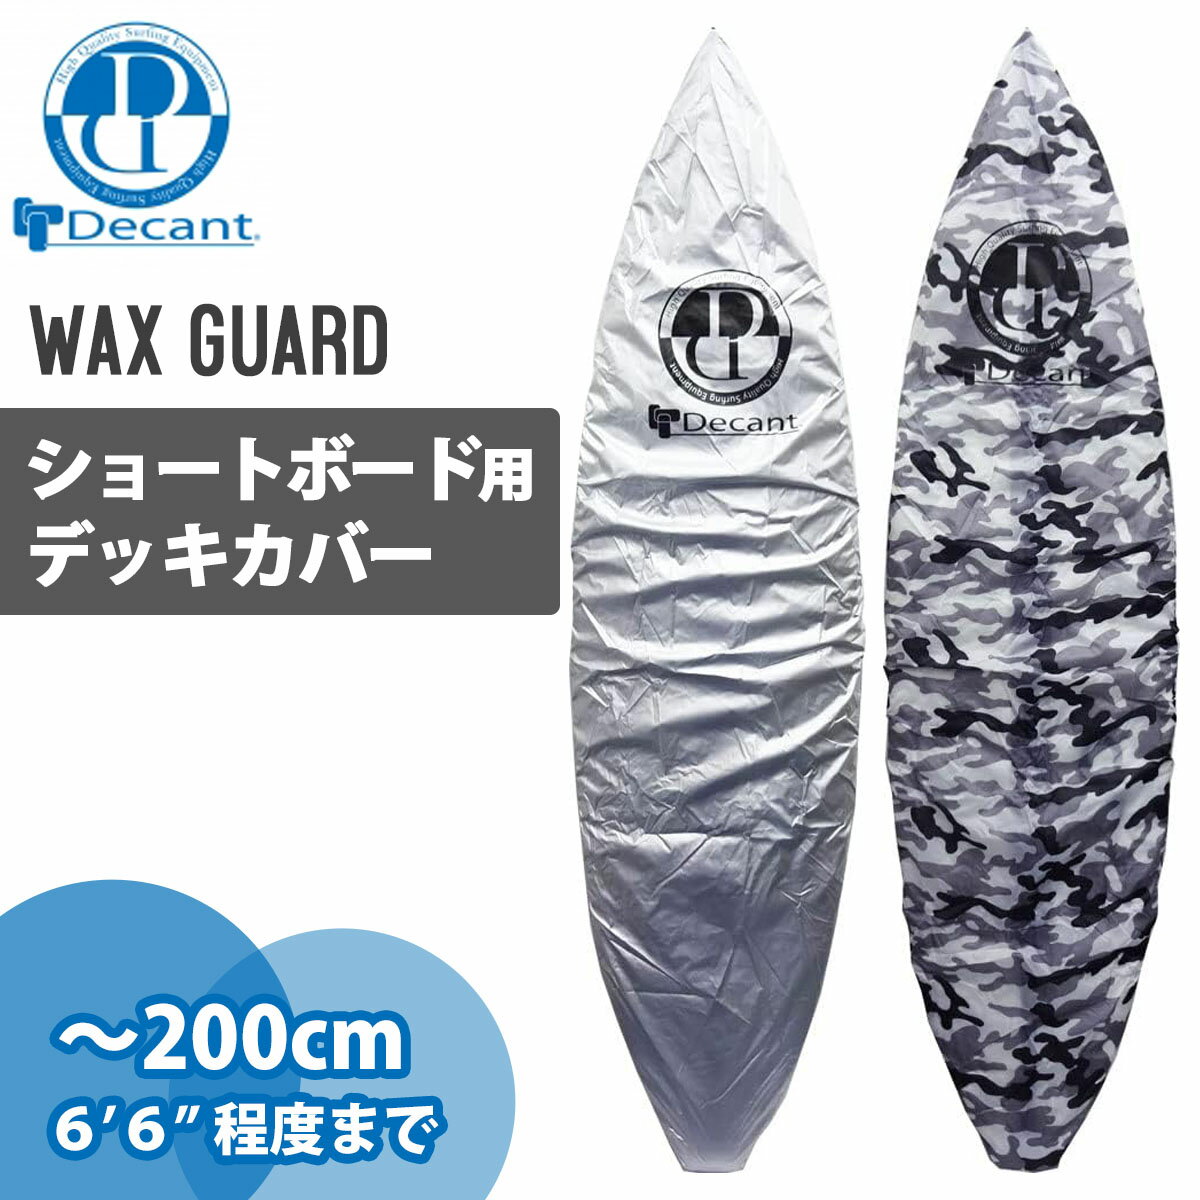 DECANT デキャント サーフボードデッキカバー ショートボード用 ワックスガード WAX GUARD SHORT BOARD サーフボード デッキカバー 日本正規品